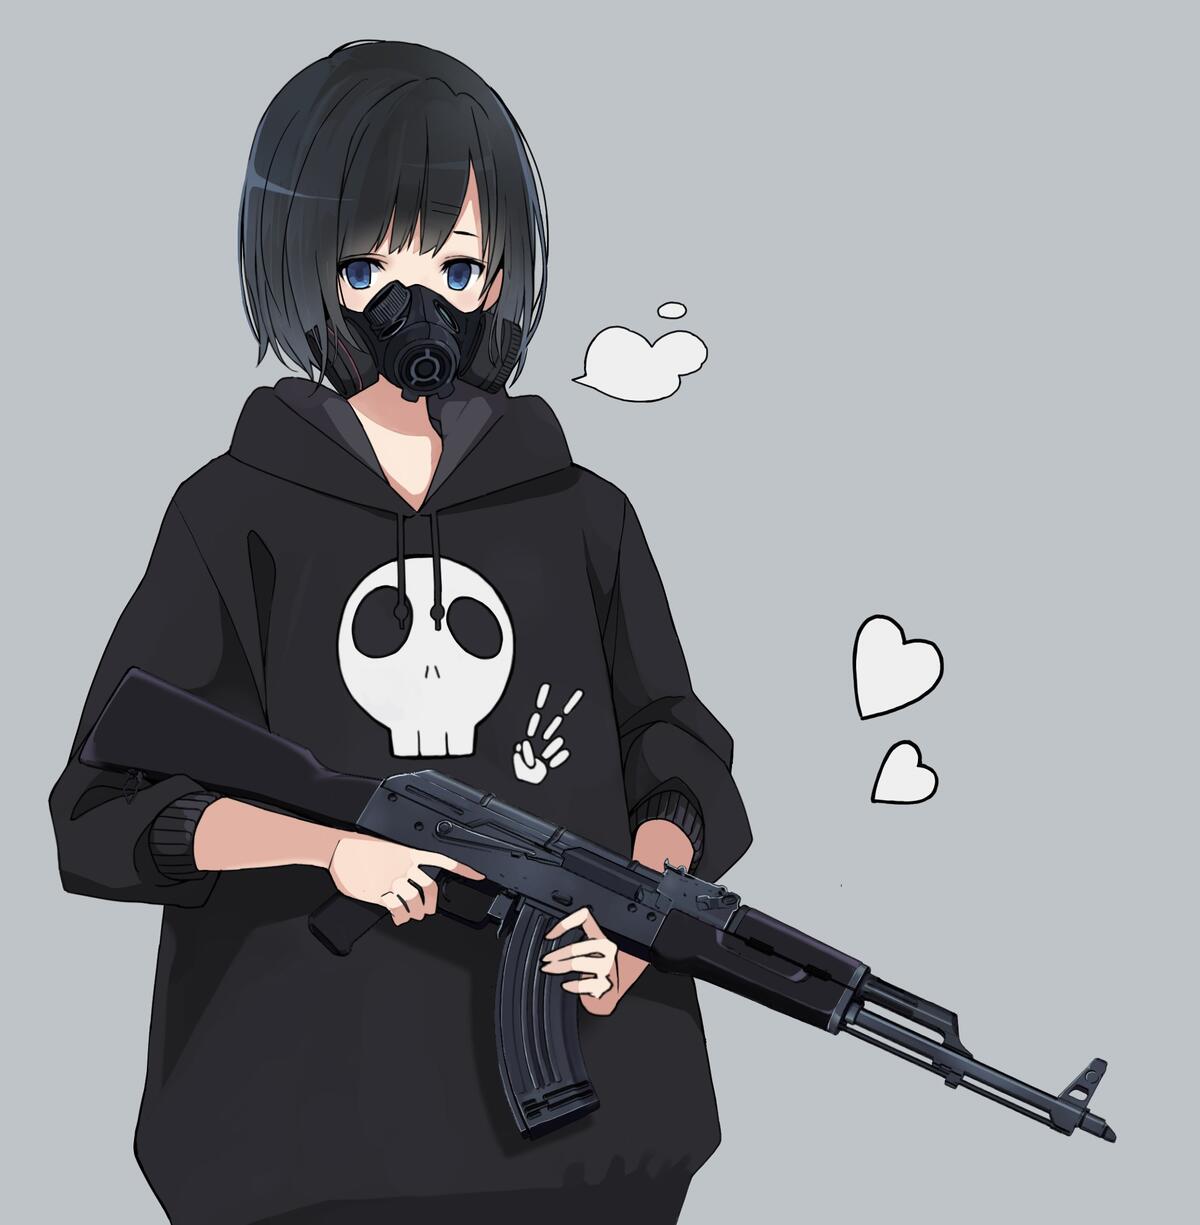 An anime girl in a black sweater with a machine gun.